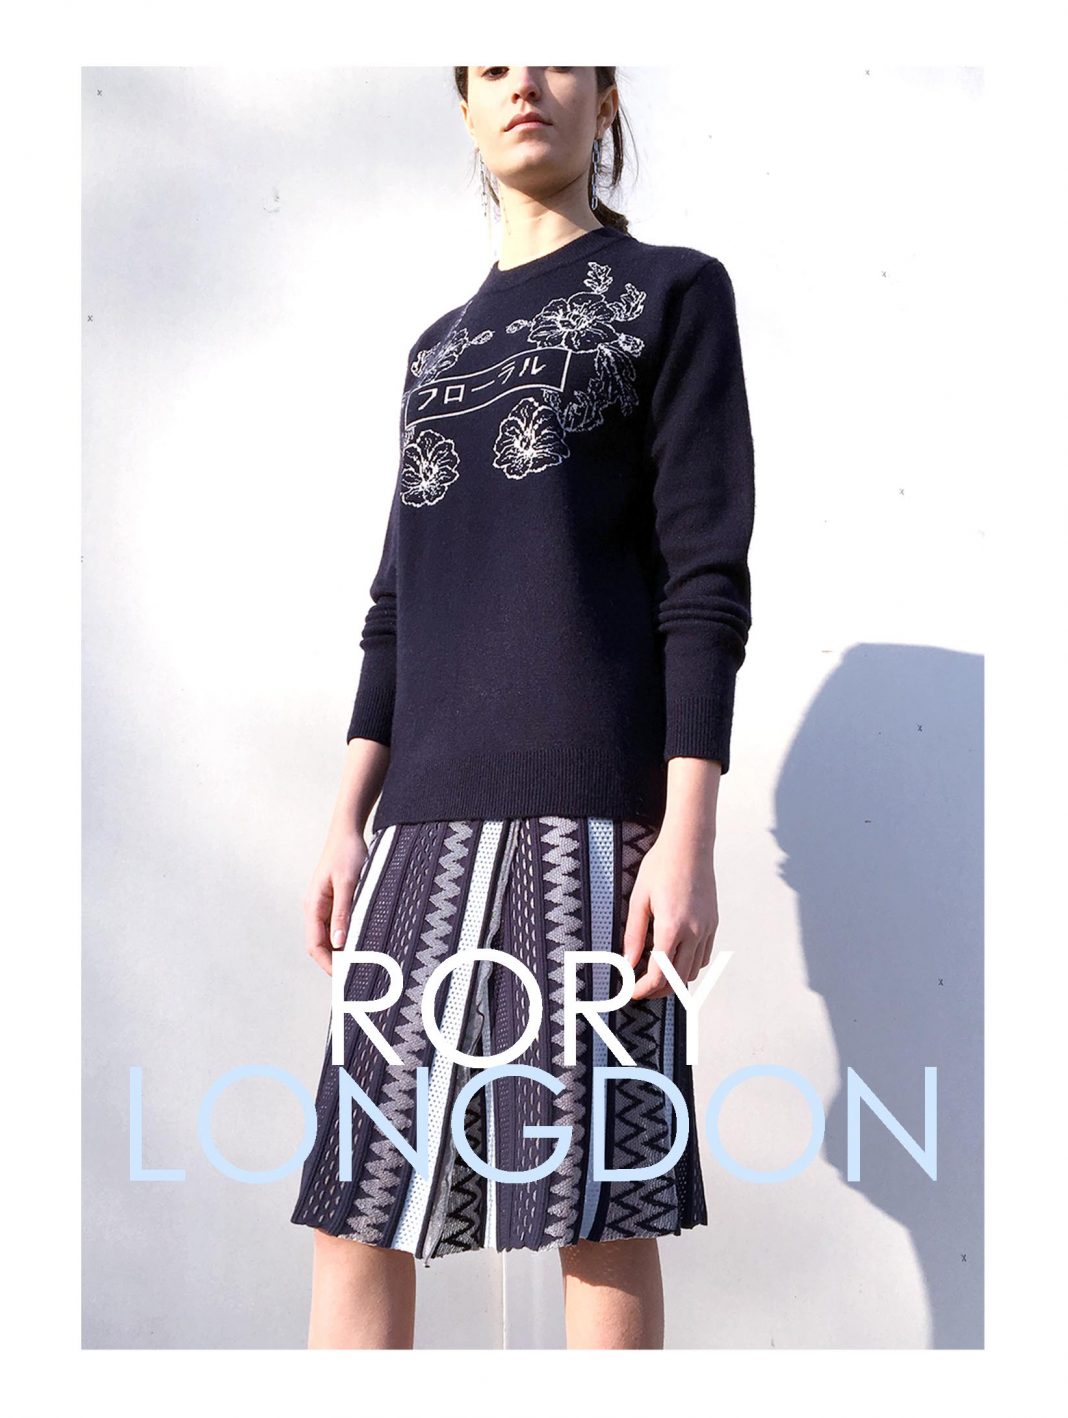 Rory Longdon knit